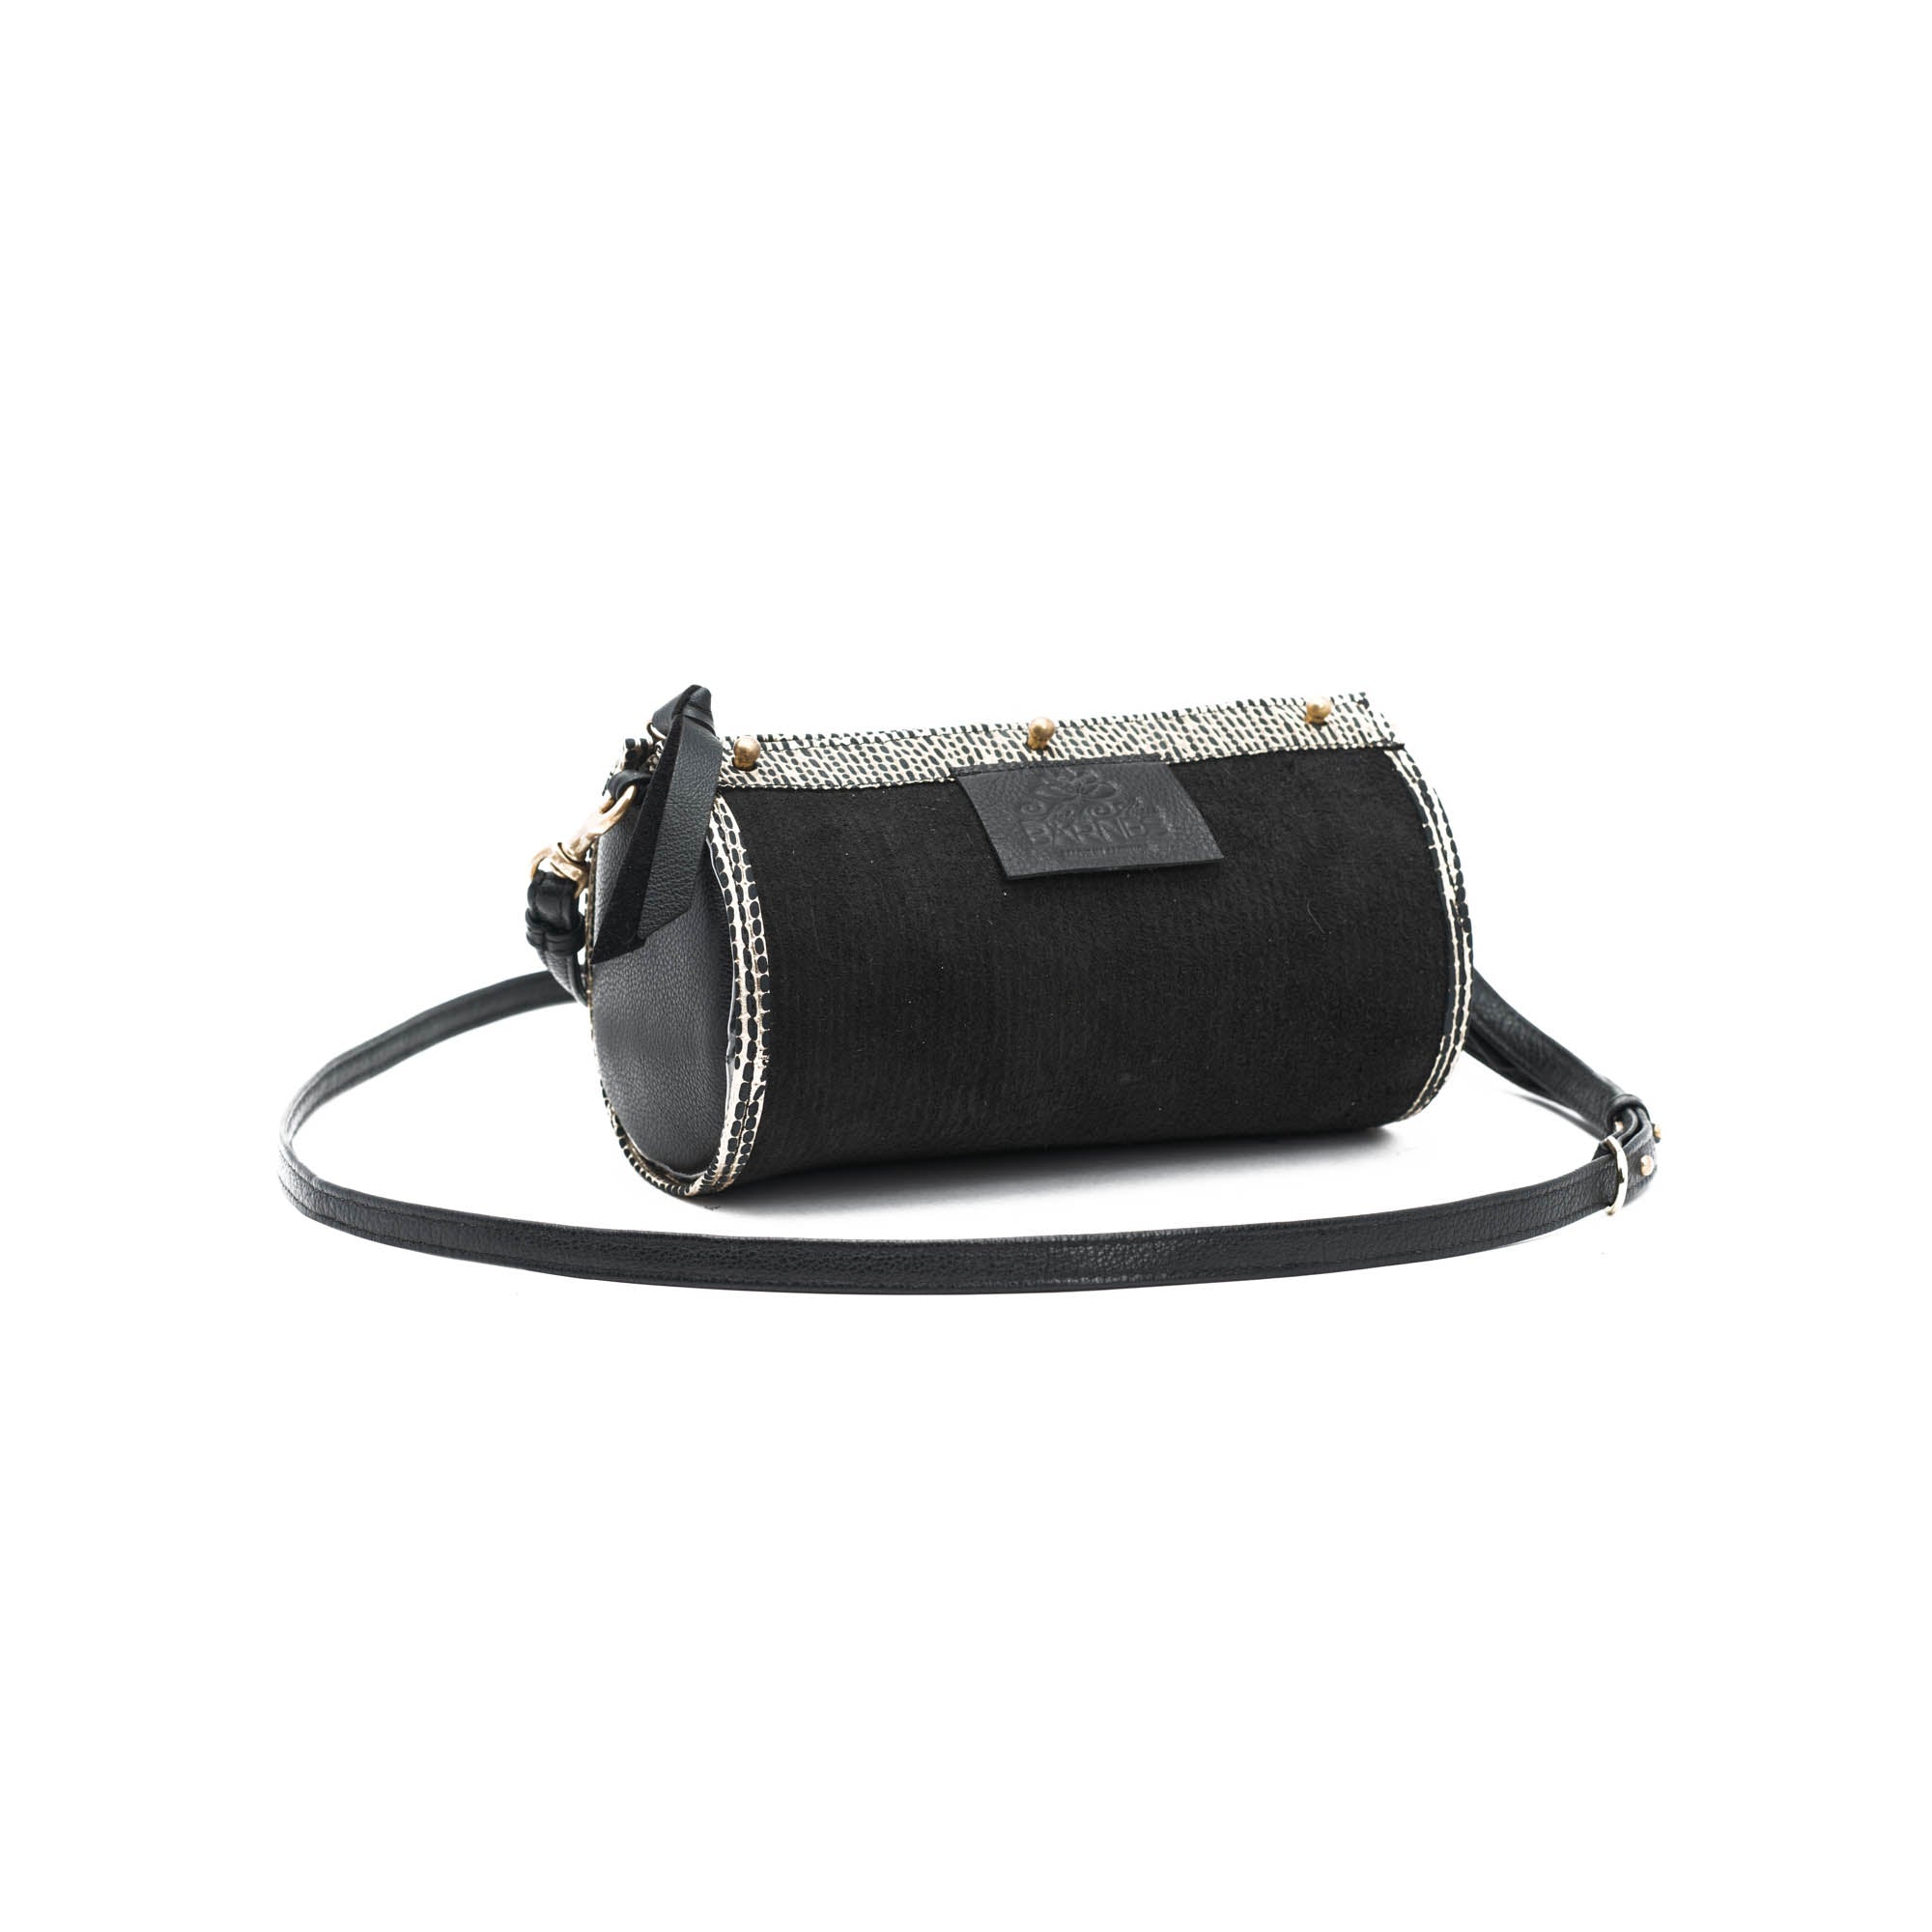 Robinson Barrel Black and Gold 5-In-1 Convertible Handbag